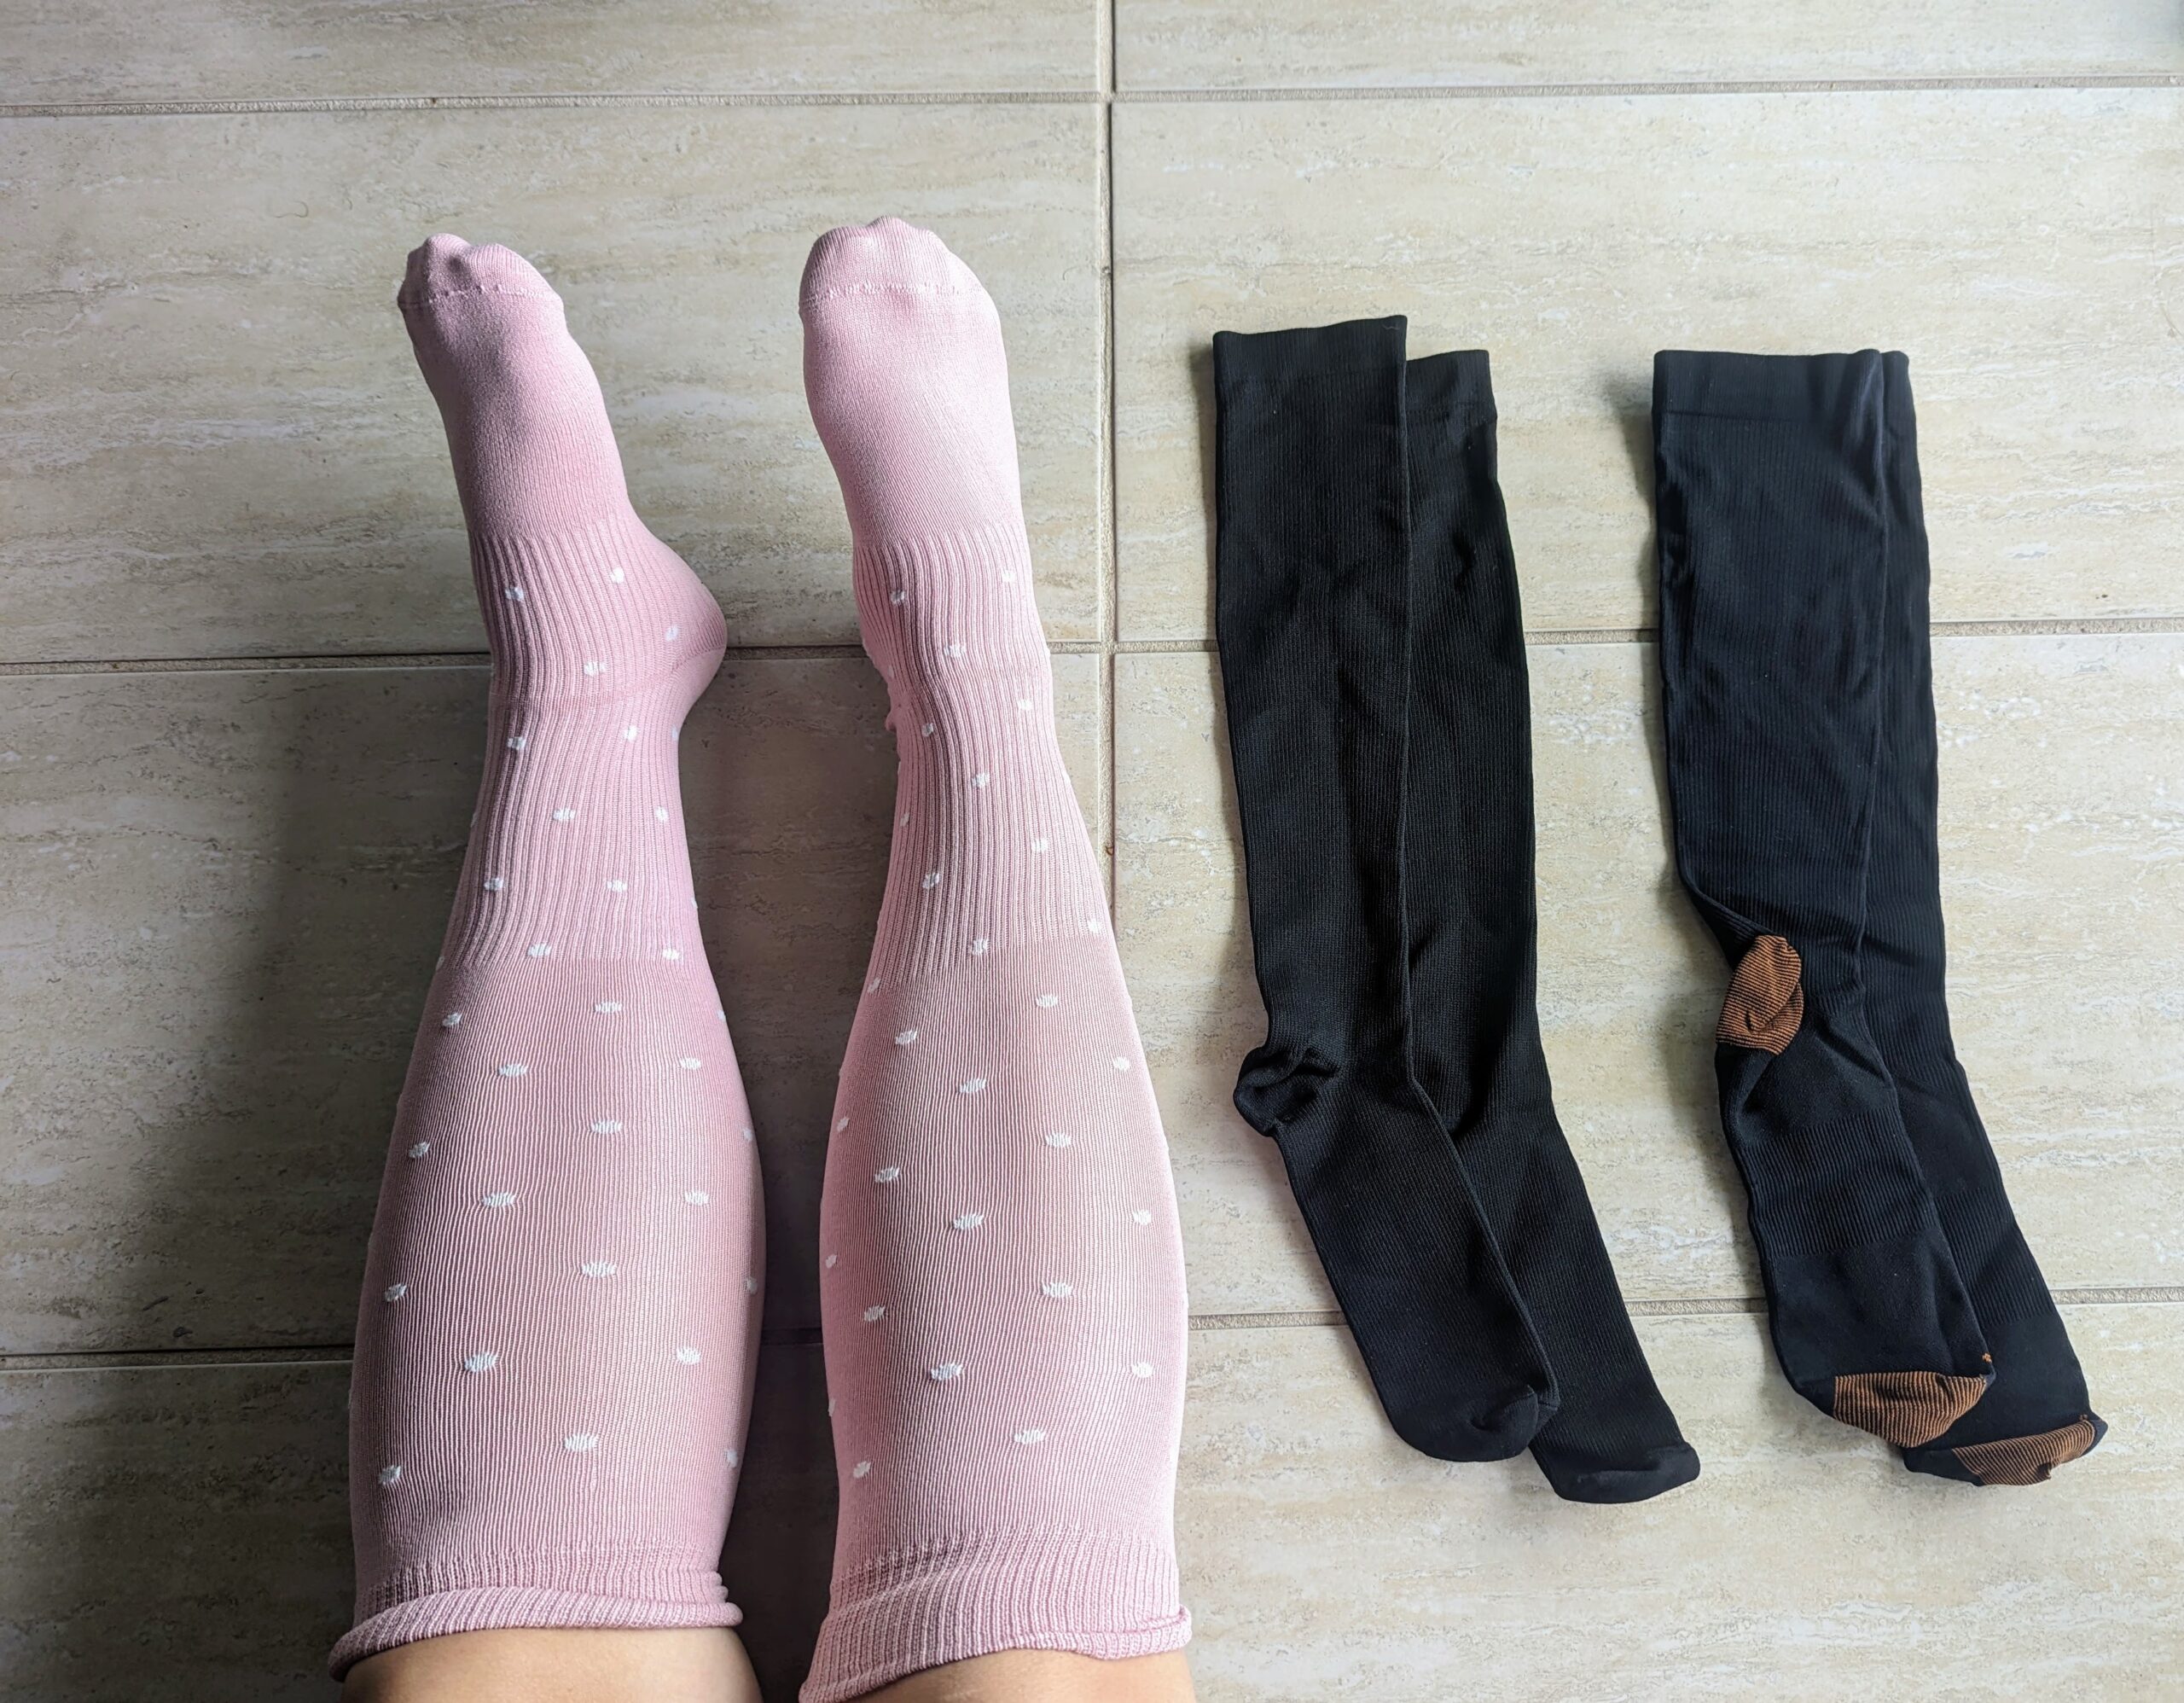 Compression Socks for Restless Leg Syndrome & Swelling